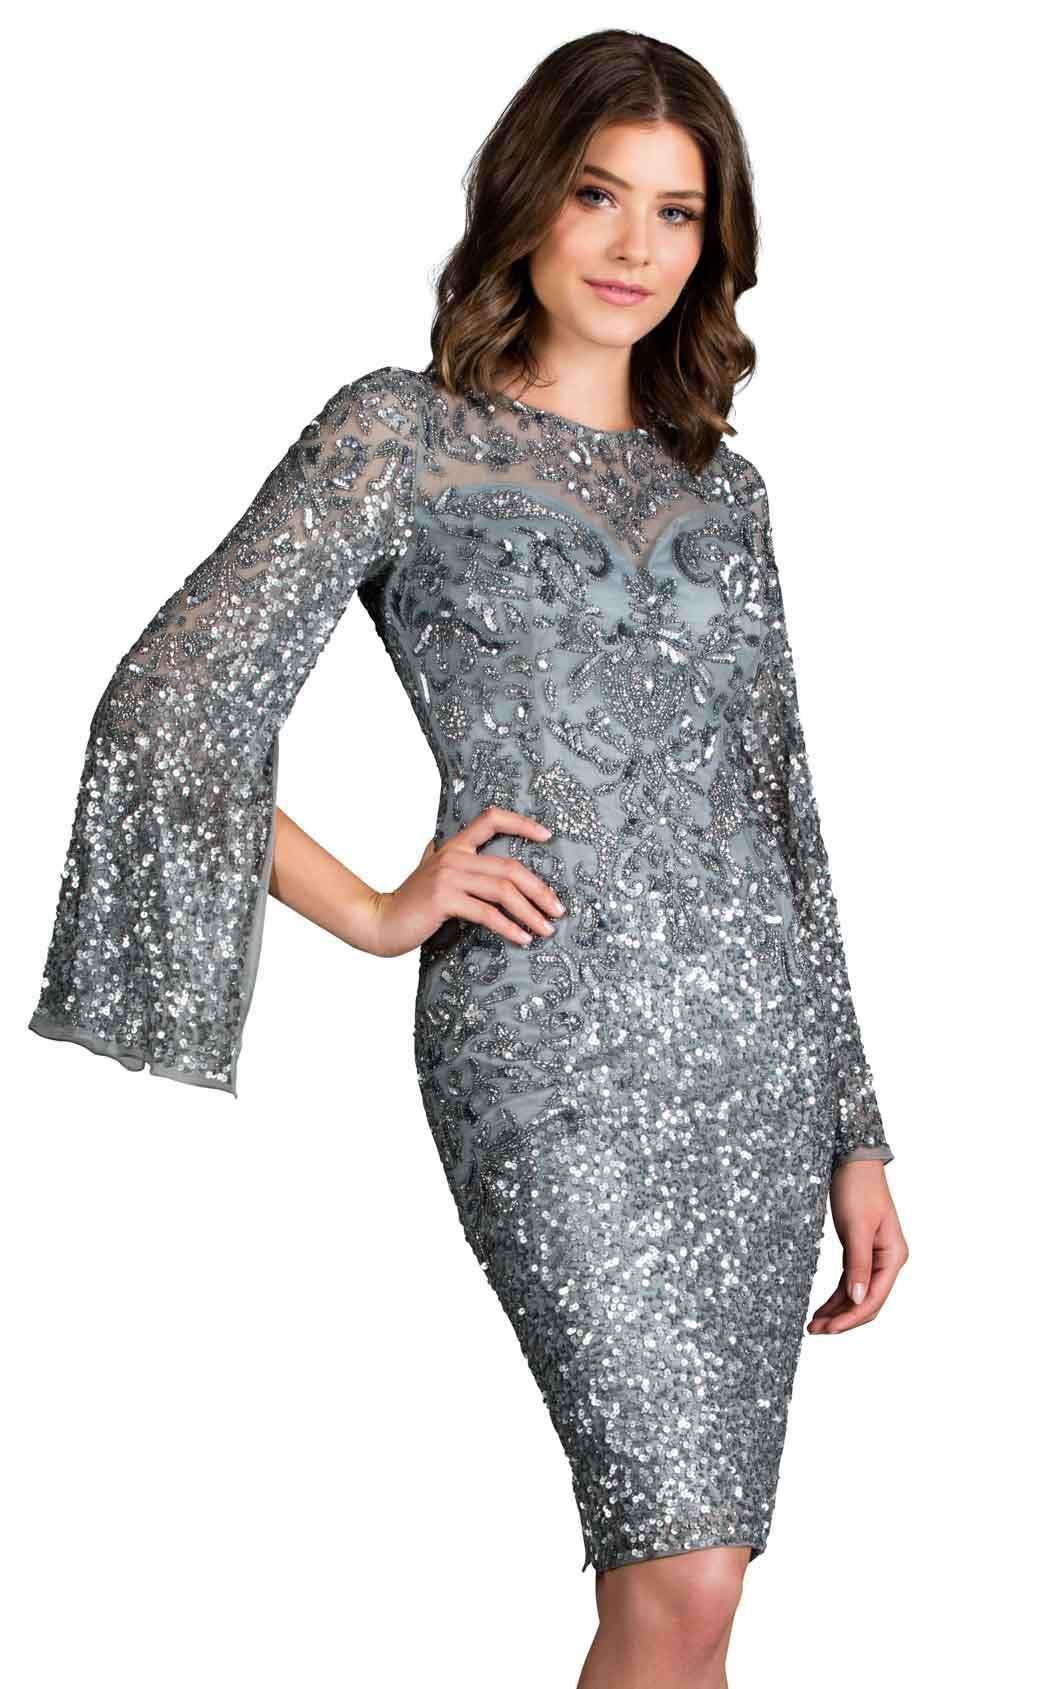 Scala 48885 Dress | NewYorkDress.com Online Store